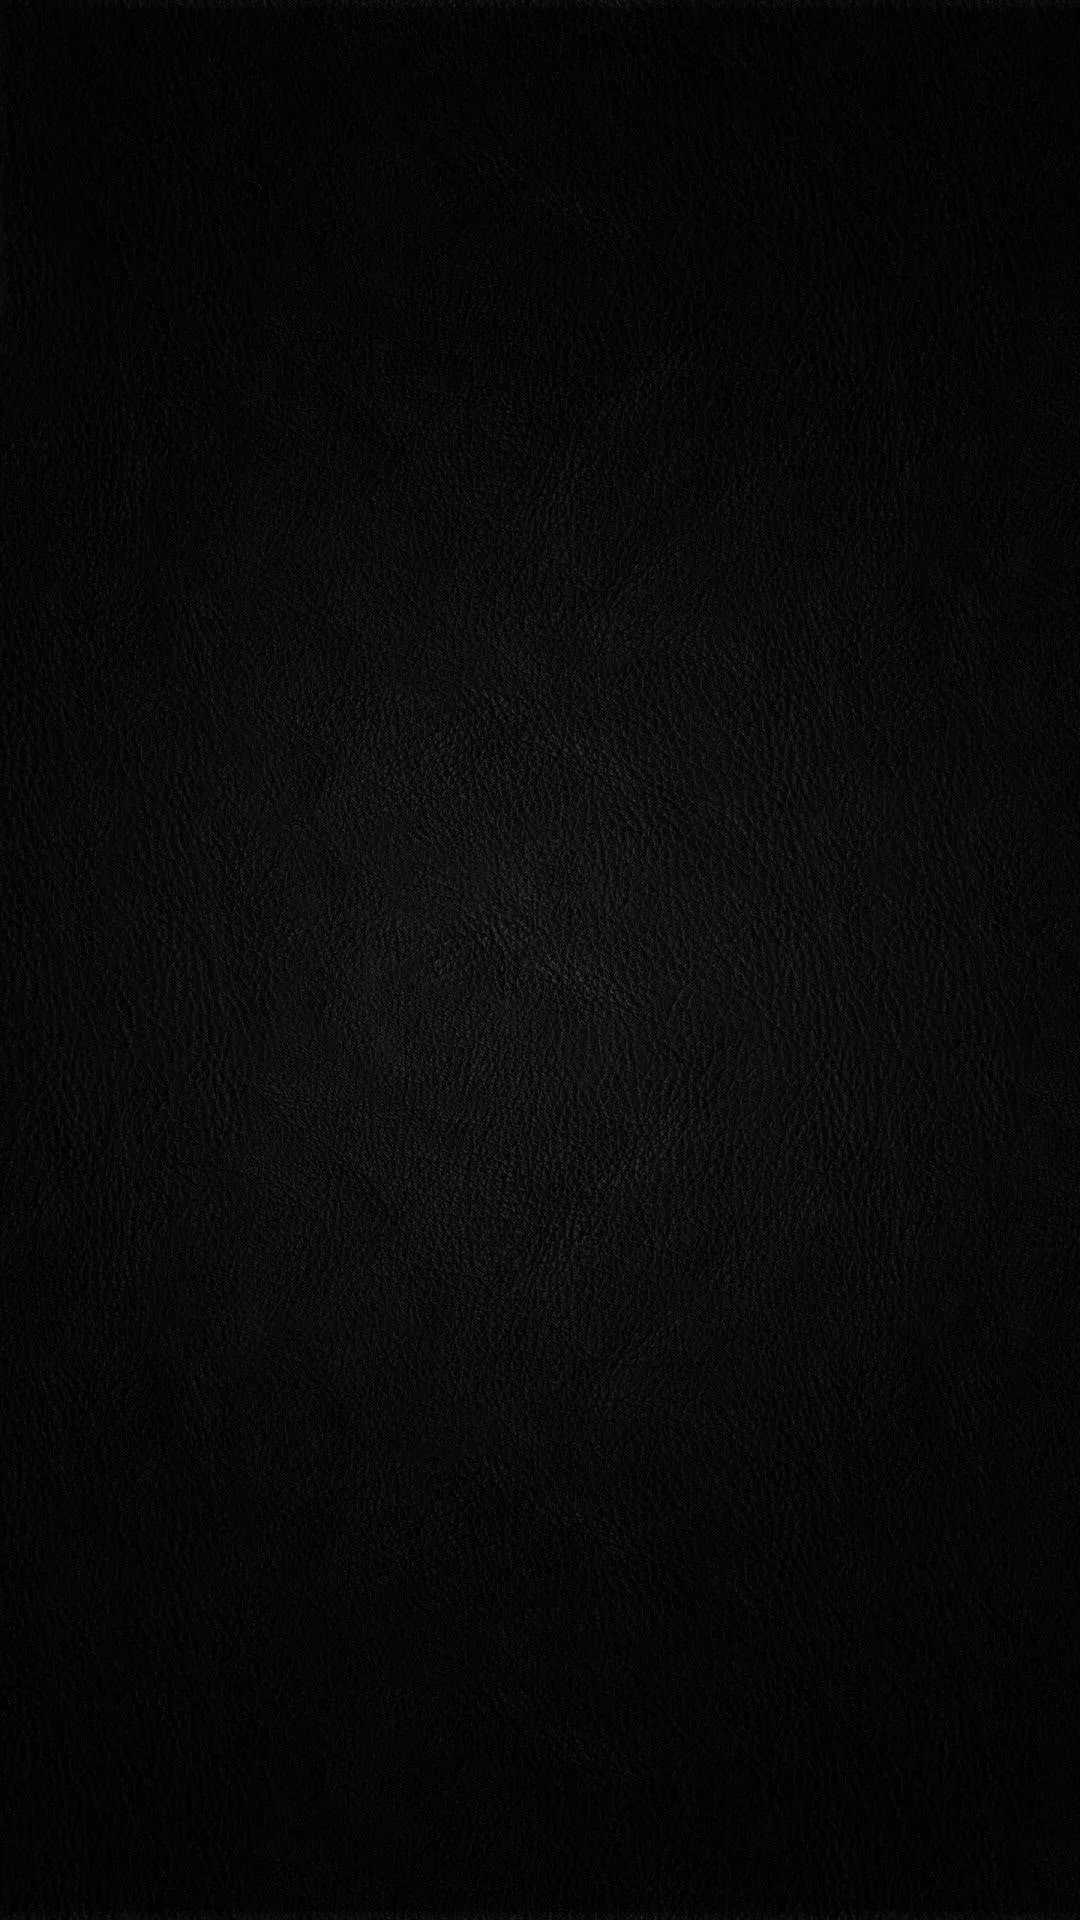 1080p Black Screen Wallpaper iPhone - KoLPaPer - Awesome Free HD Wallpapers